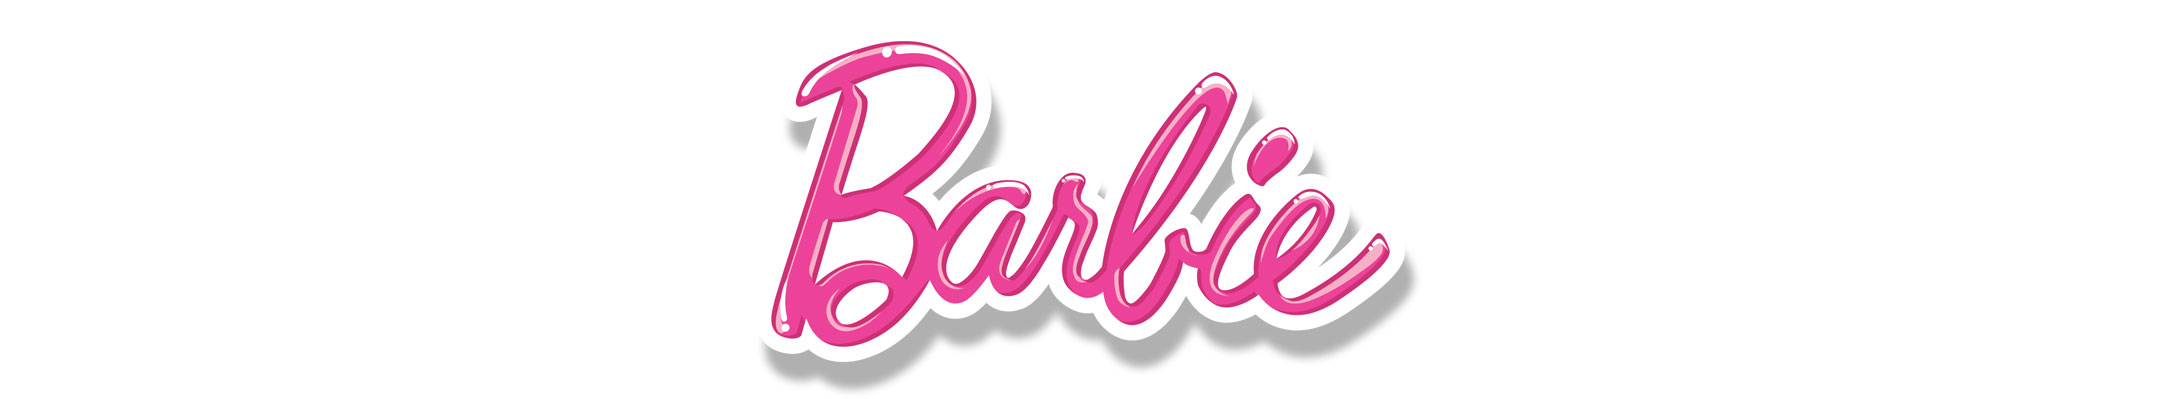 BarbieLogo_Sml_02